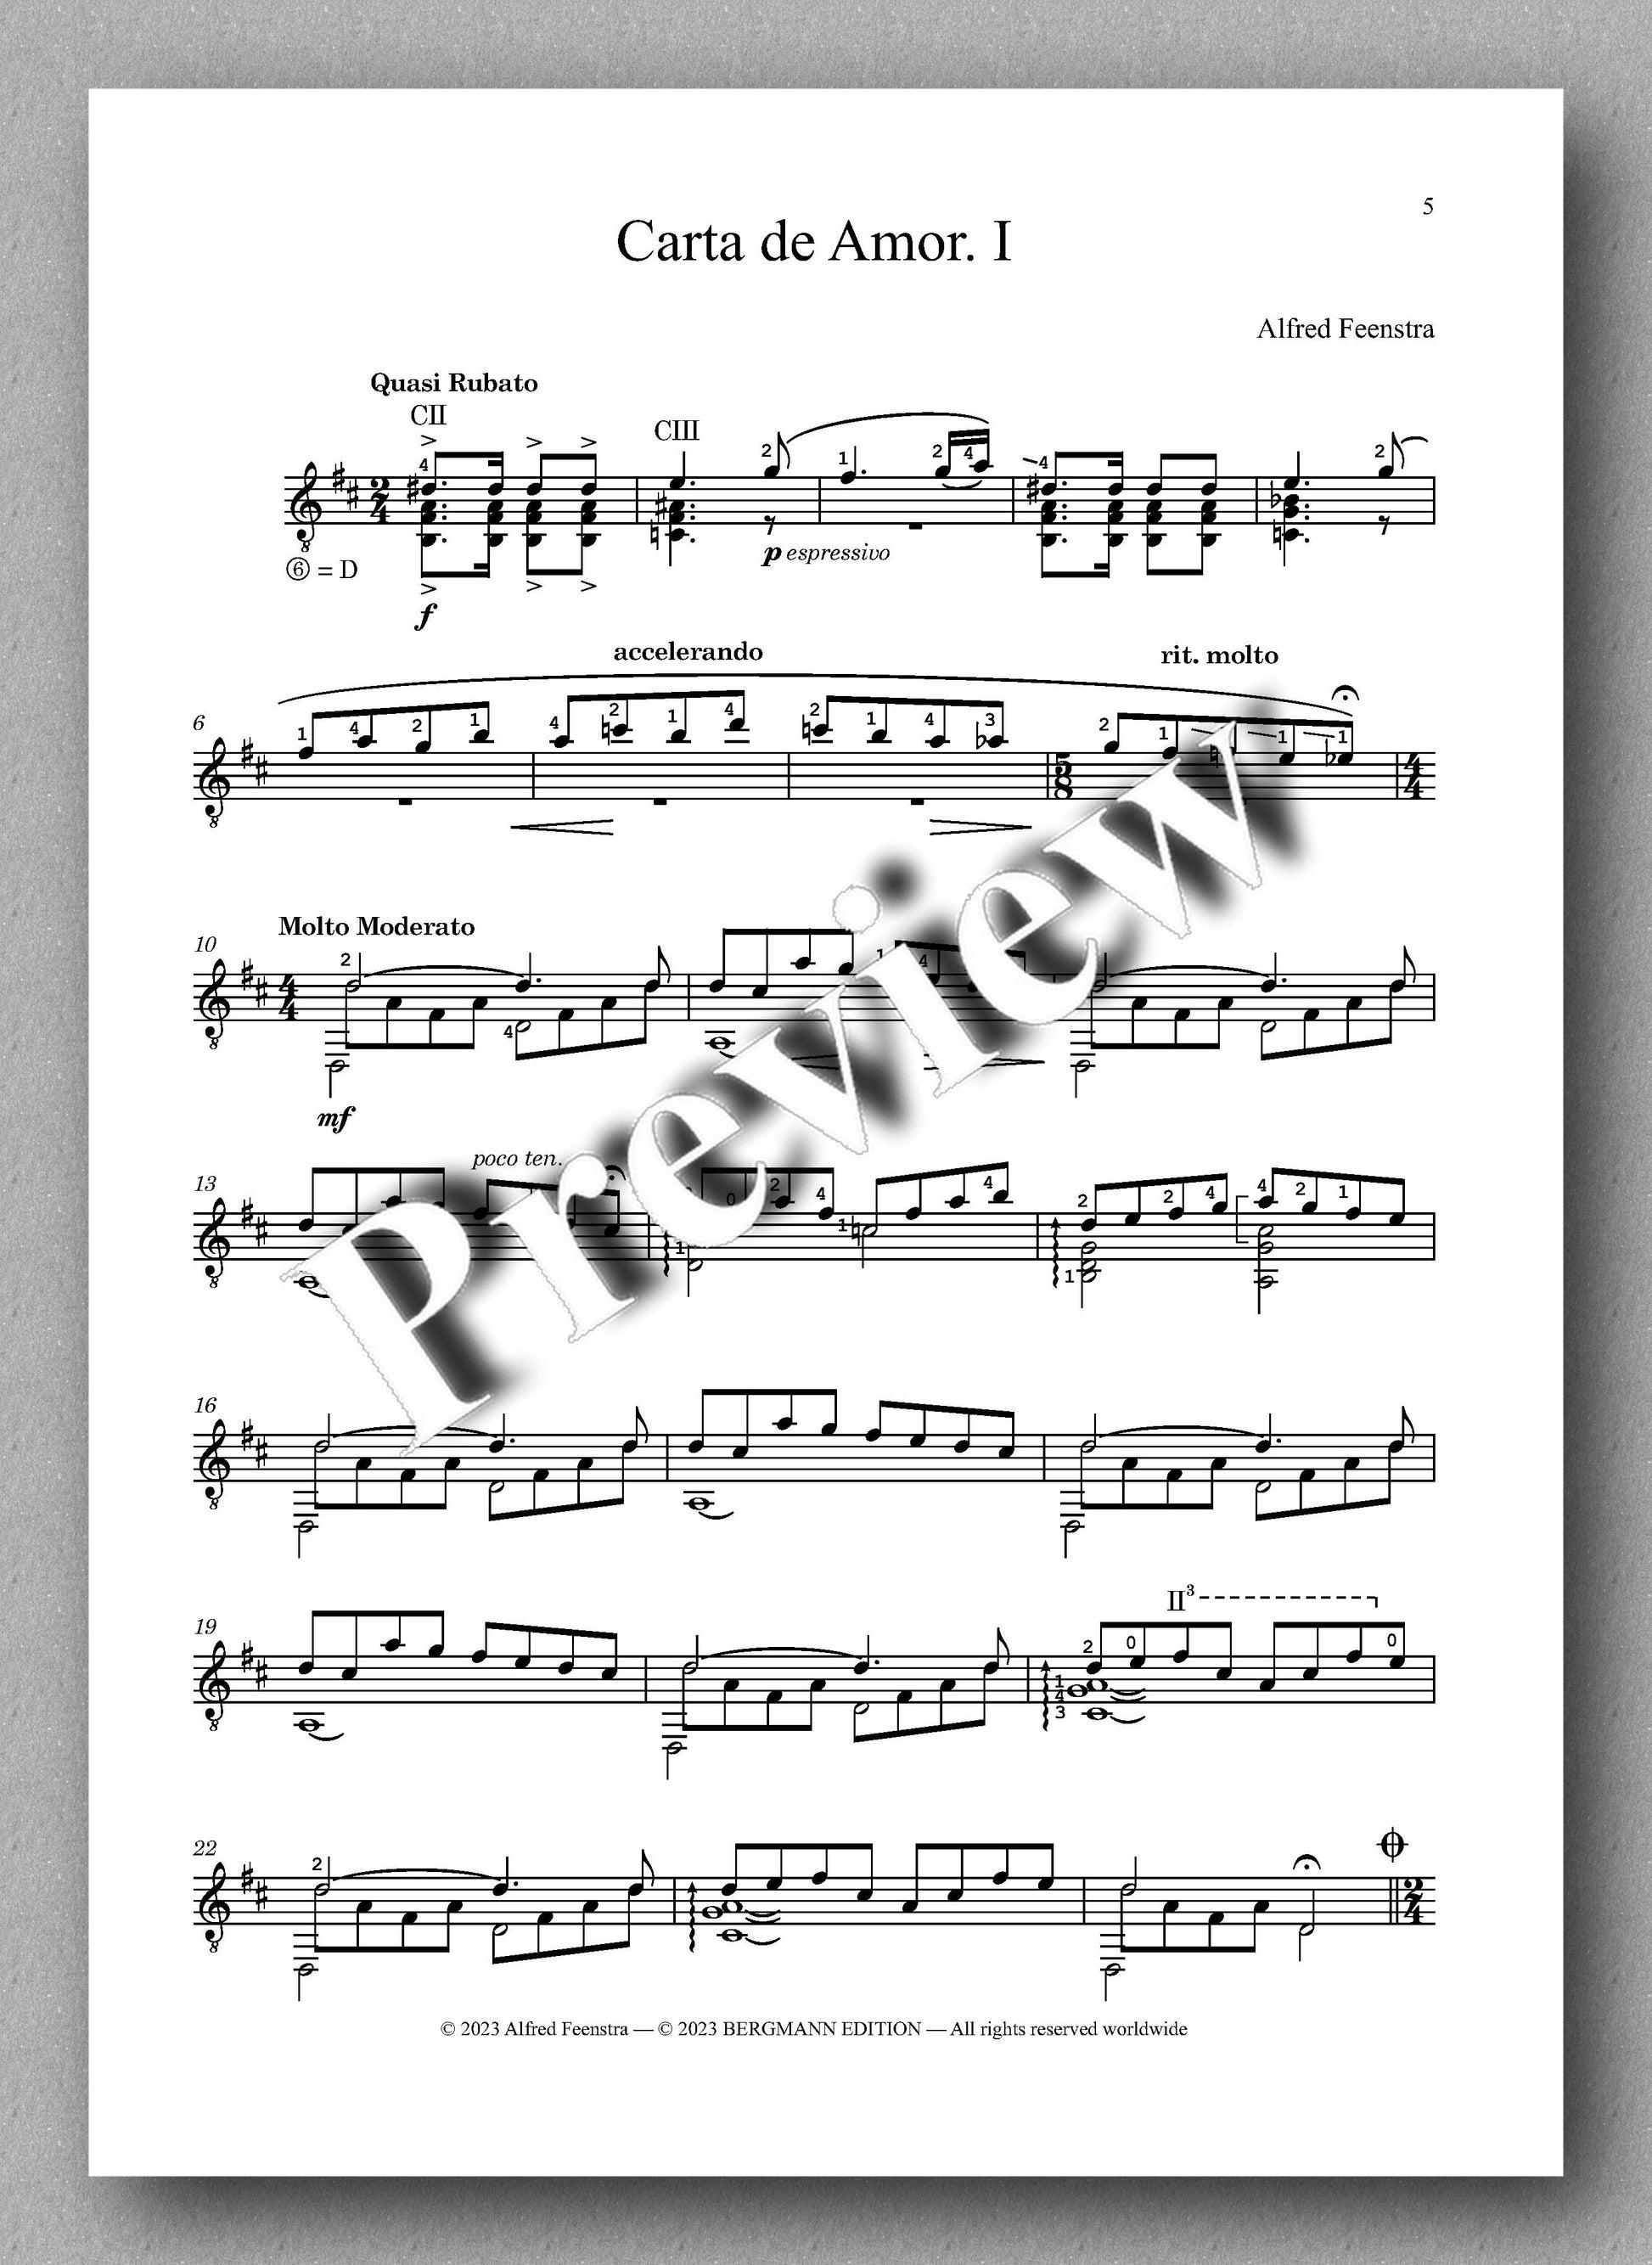 Alfred Feenstra, Cartas de Amor - preview of the music score 1